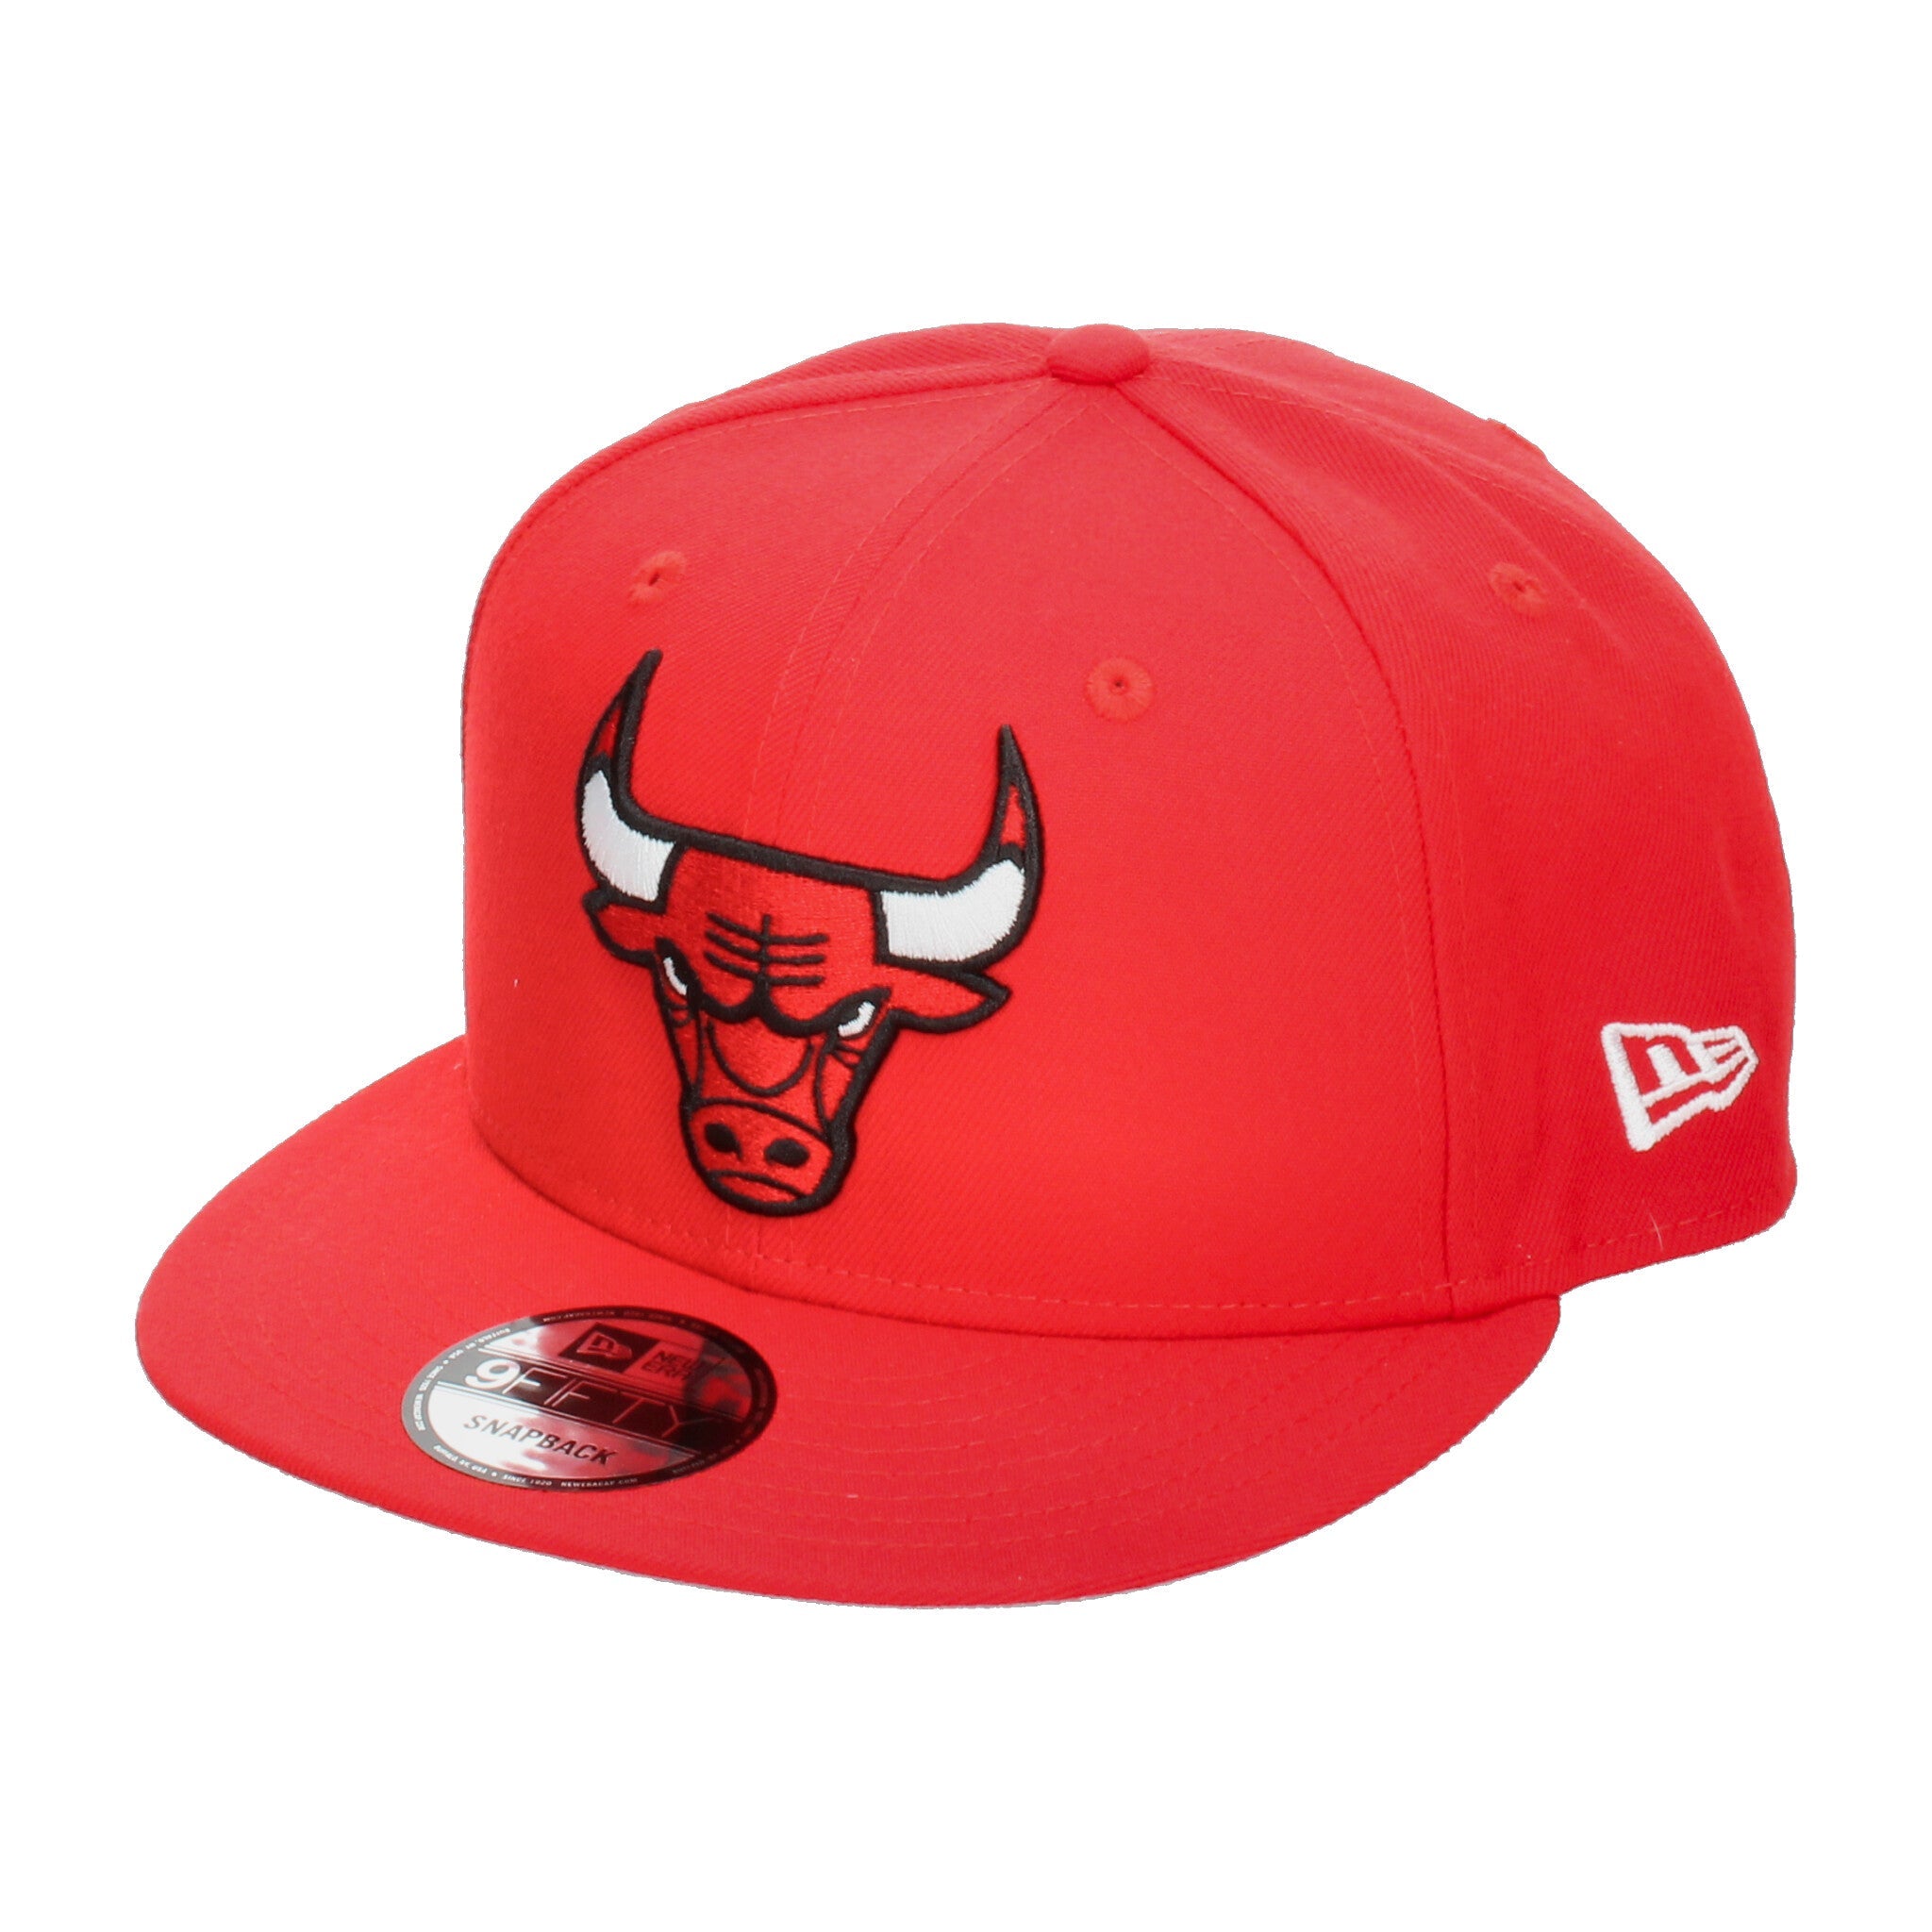 Gorra Nwe Era Chicago Bulls Rojo [NWR71] NEW ERA 